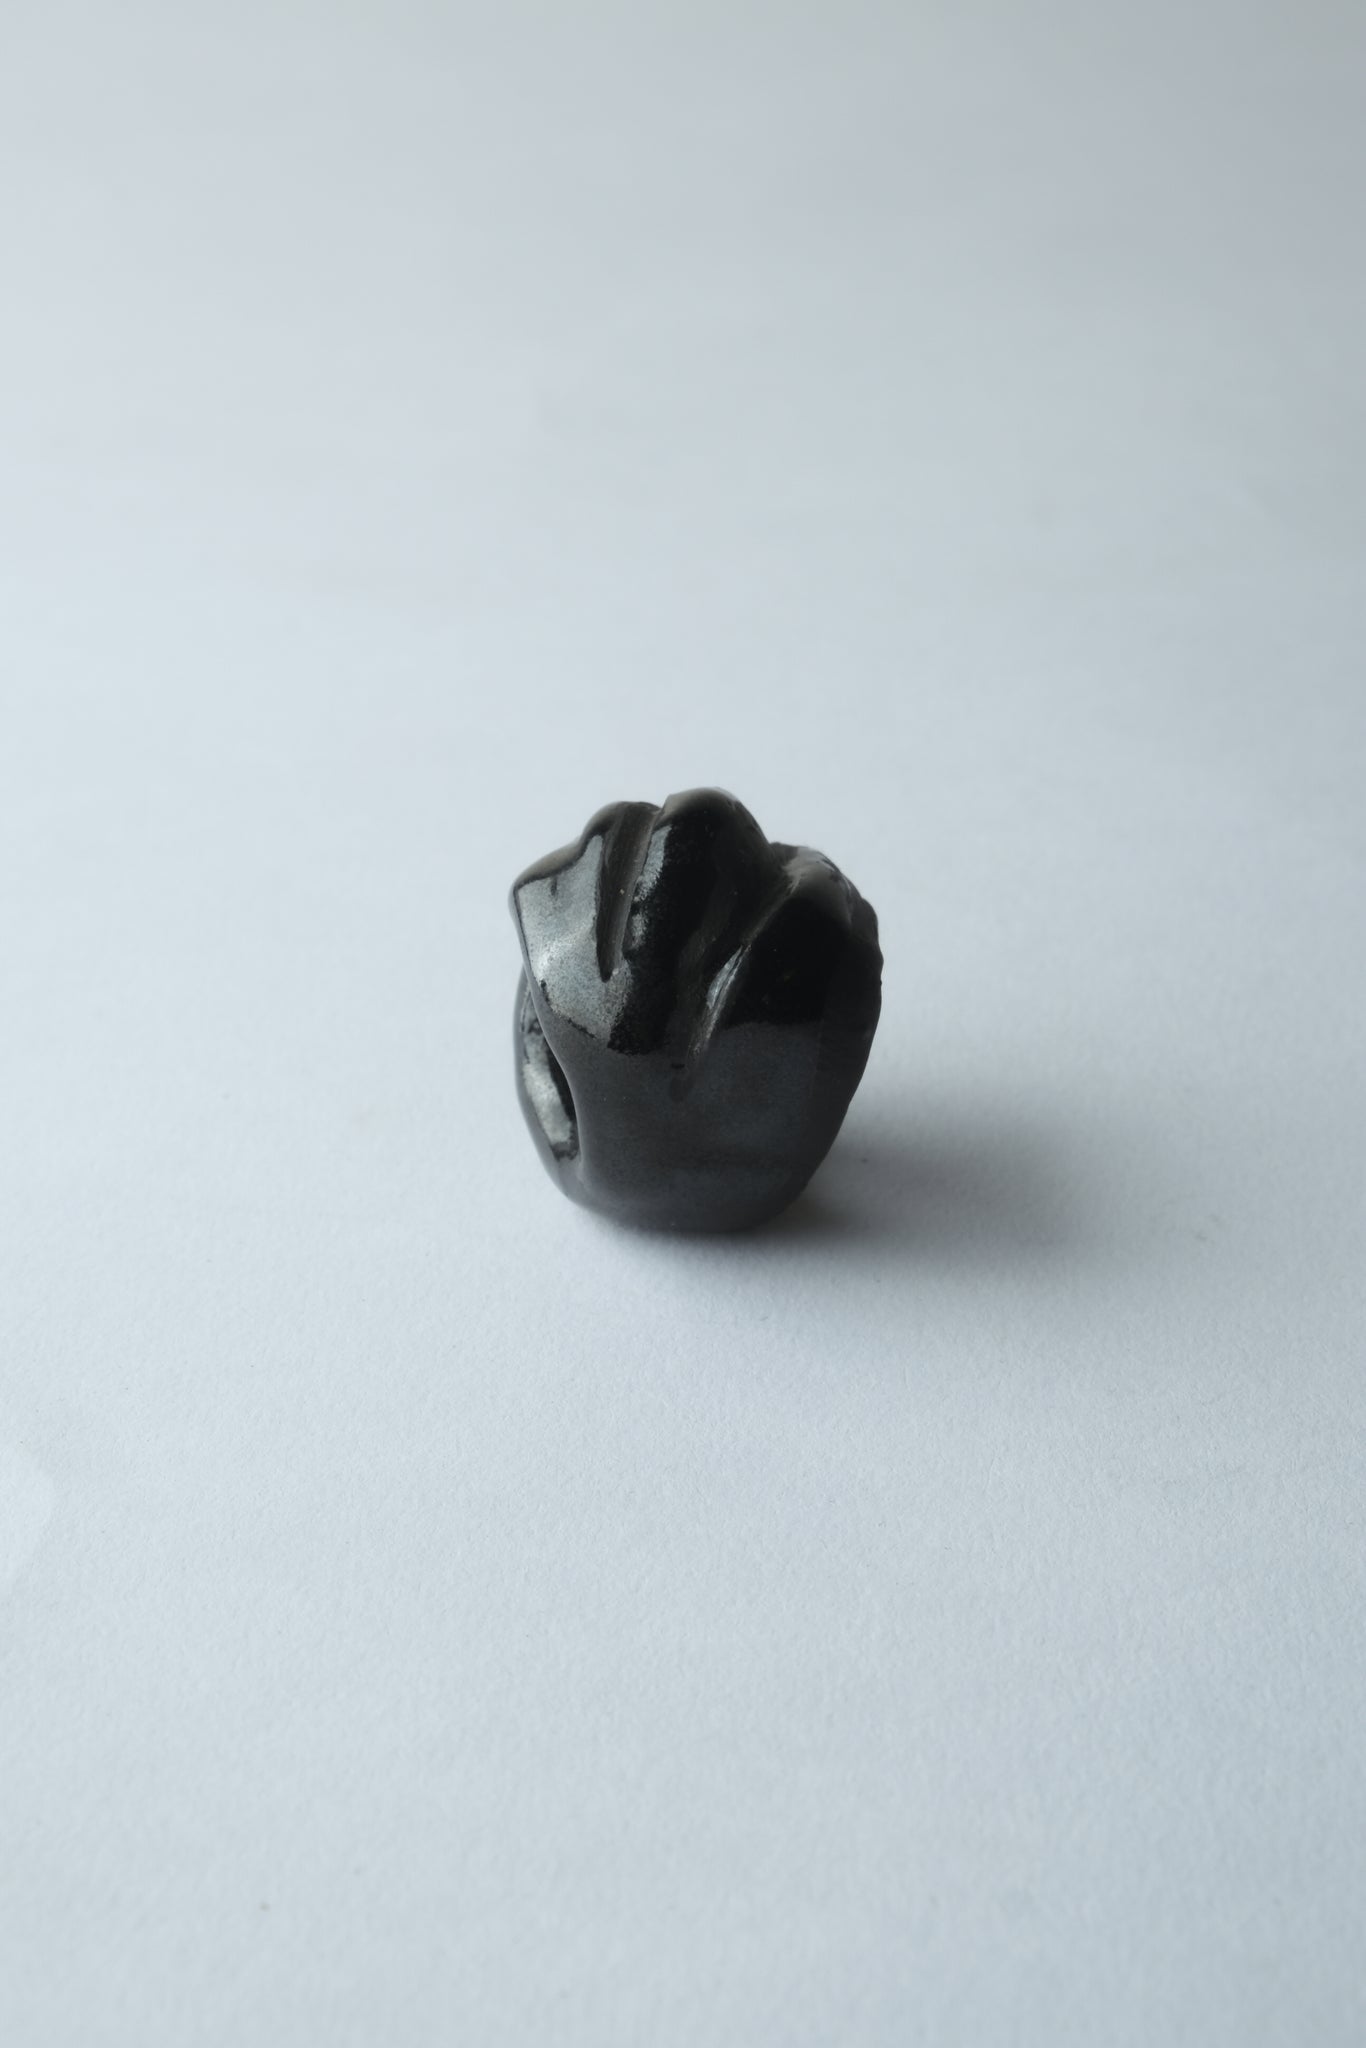 1/1 – Glazed Black Ceramic Cycles Ring